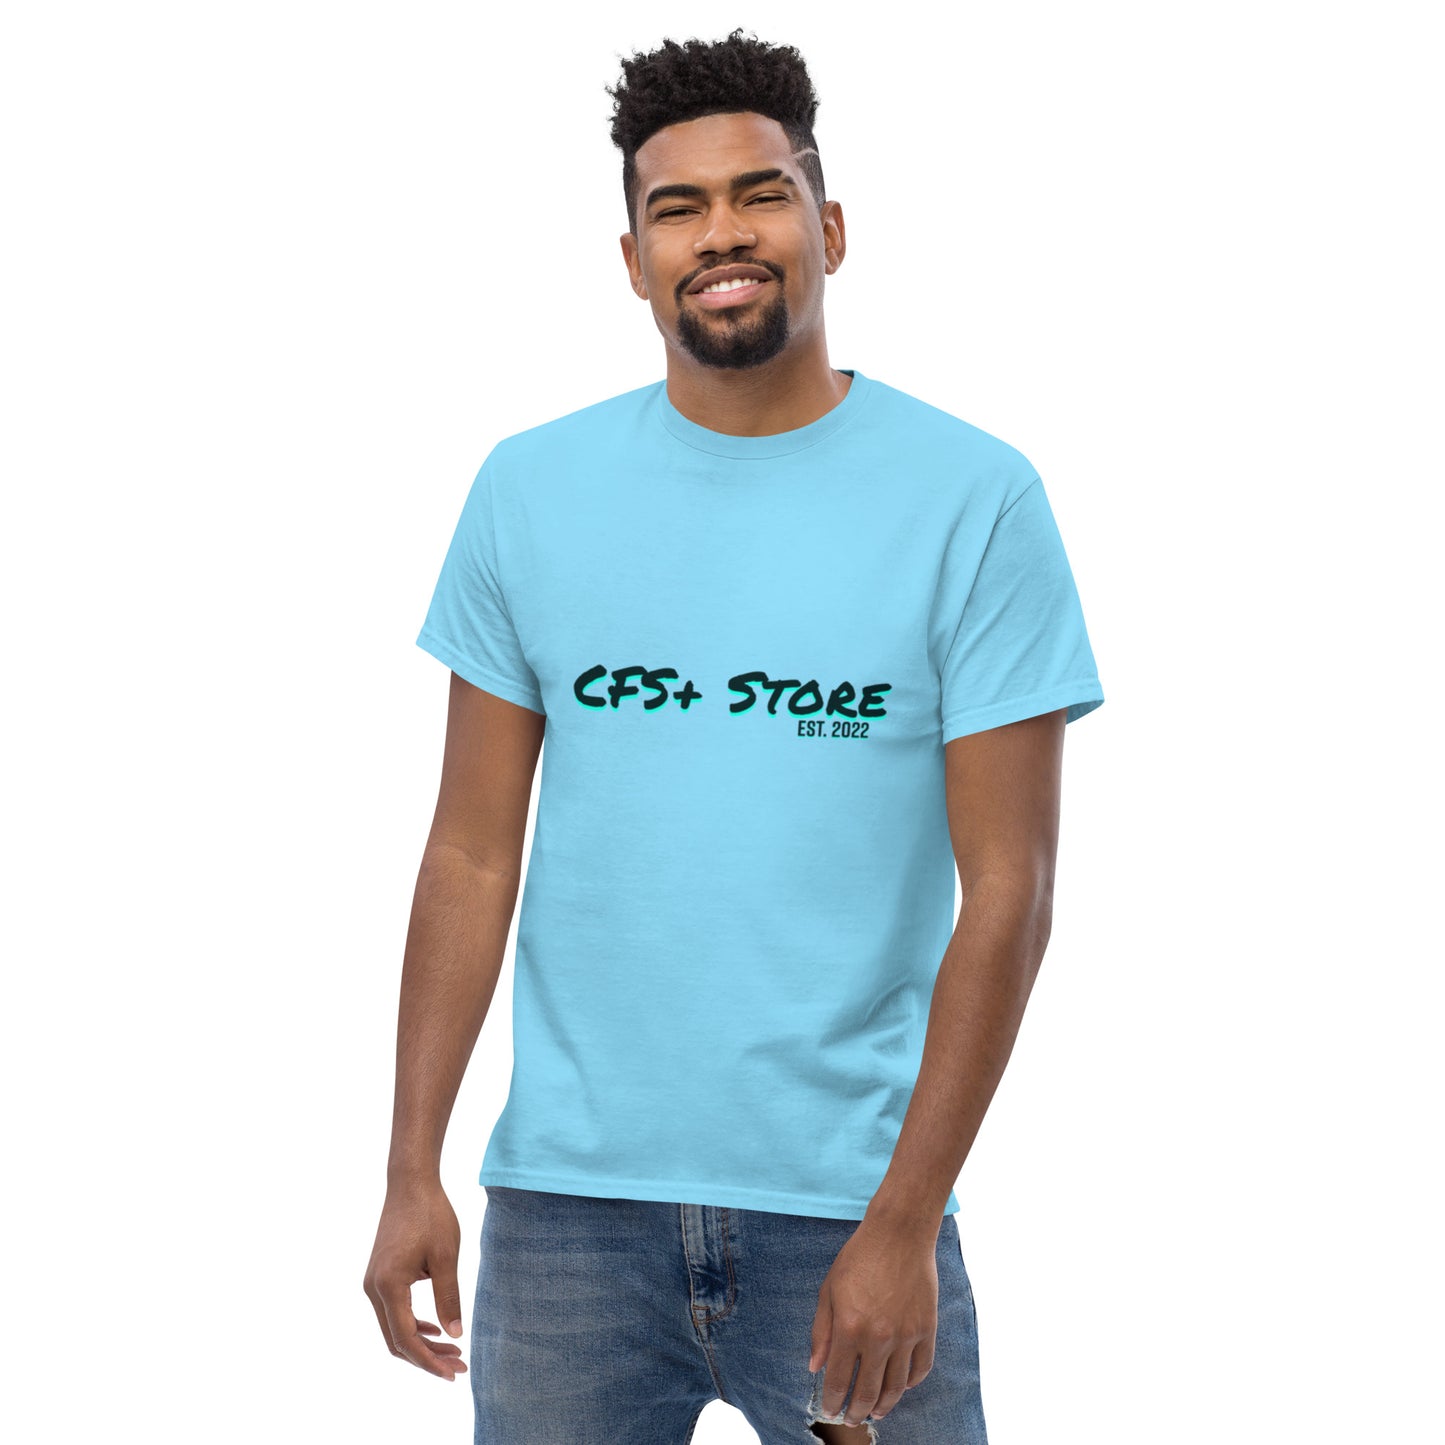 CFS+ Store classic tee